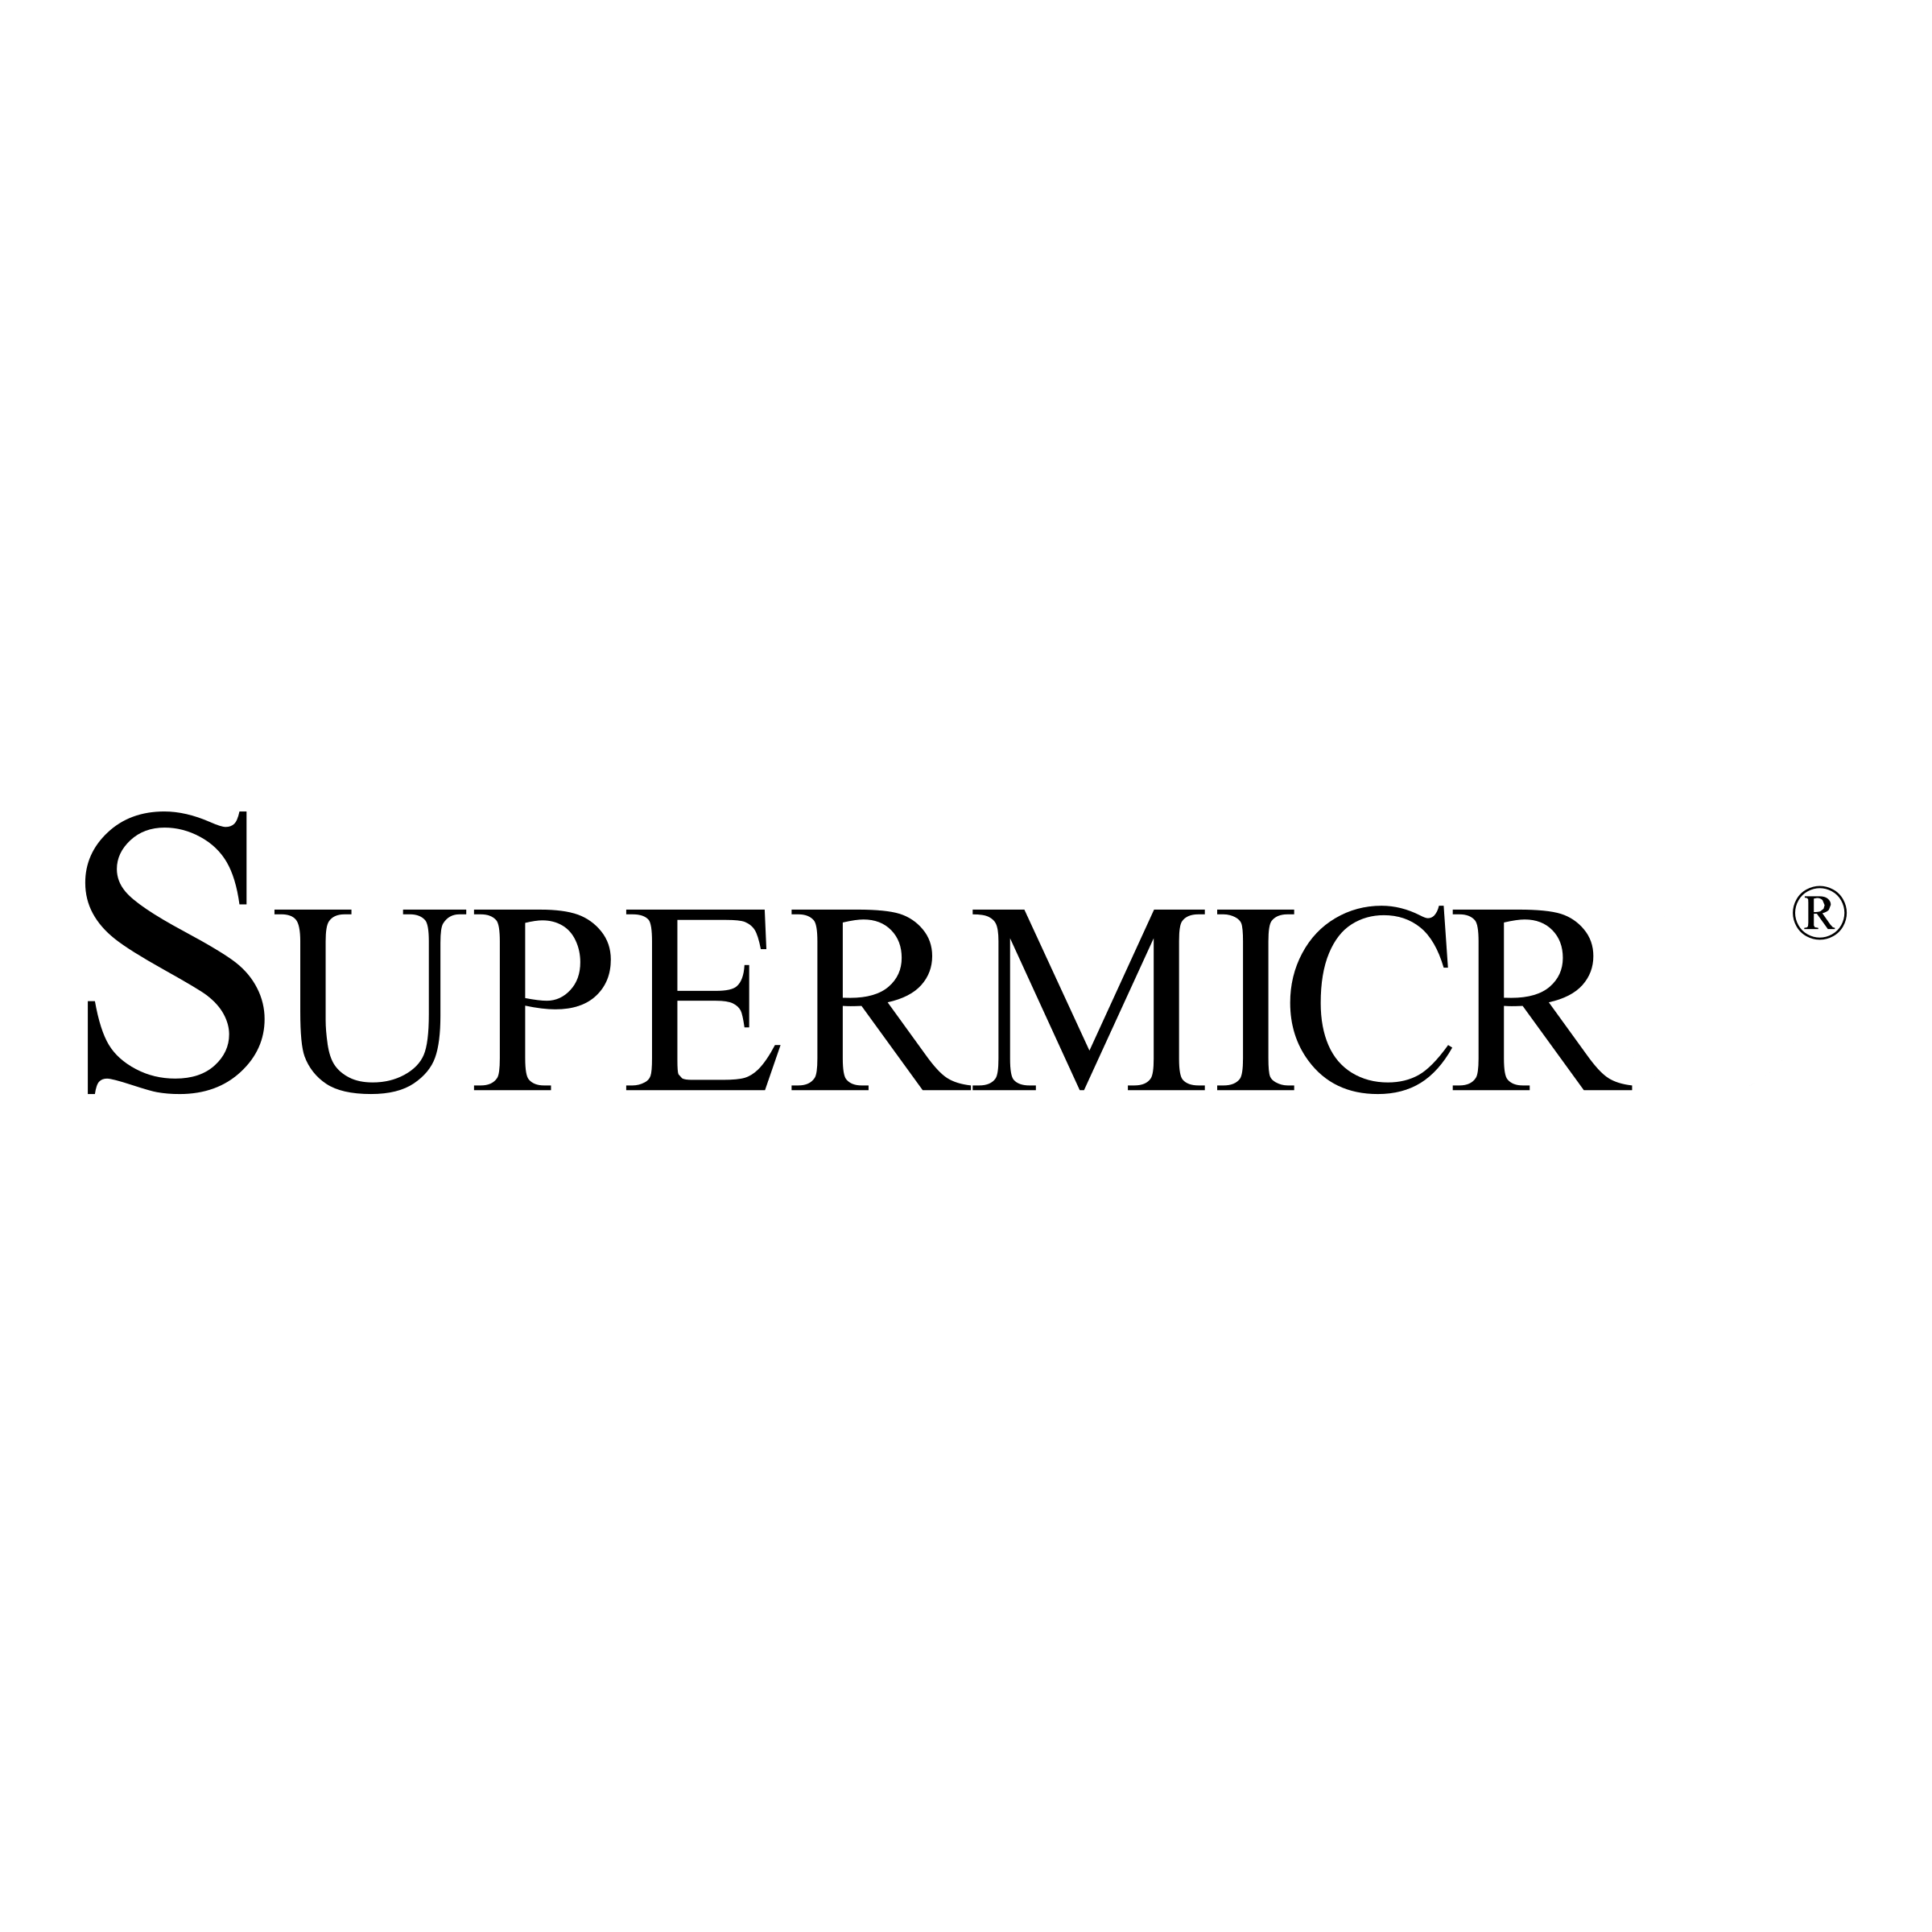 Supermicro Logo - SuperMicro Computer Logo PNG Transparent & SVG Vector